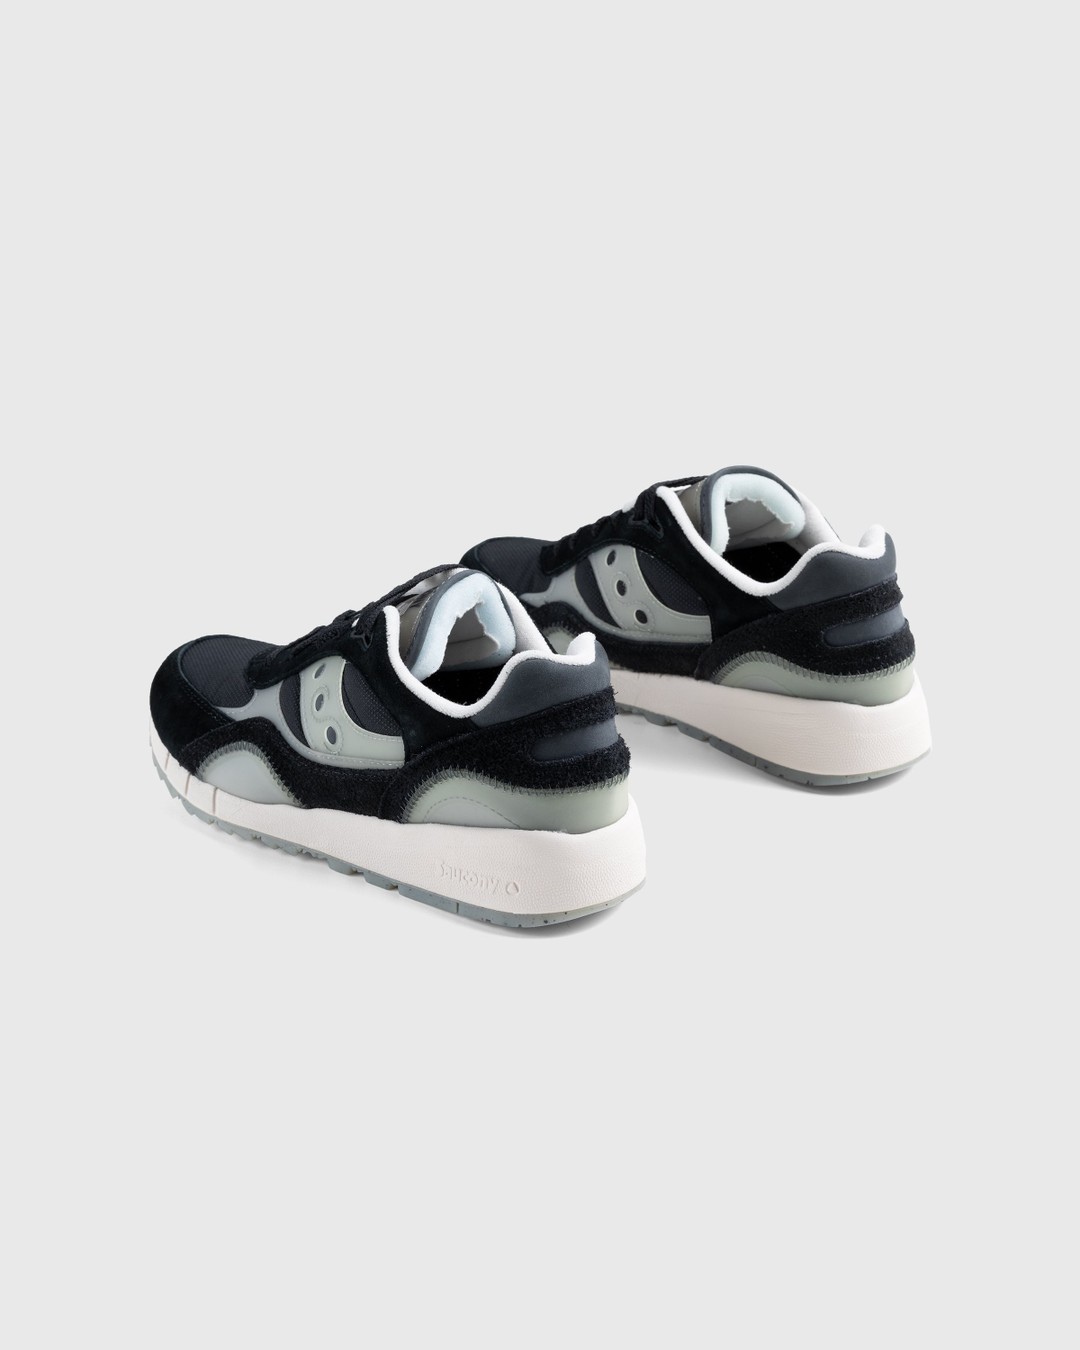 Saucony – Shadow 6000 Black - Sneakers - Black - Image 4